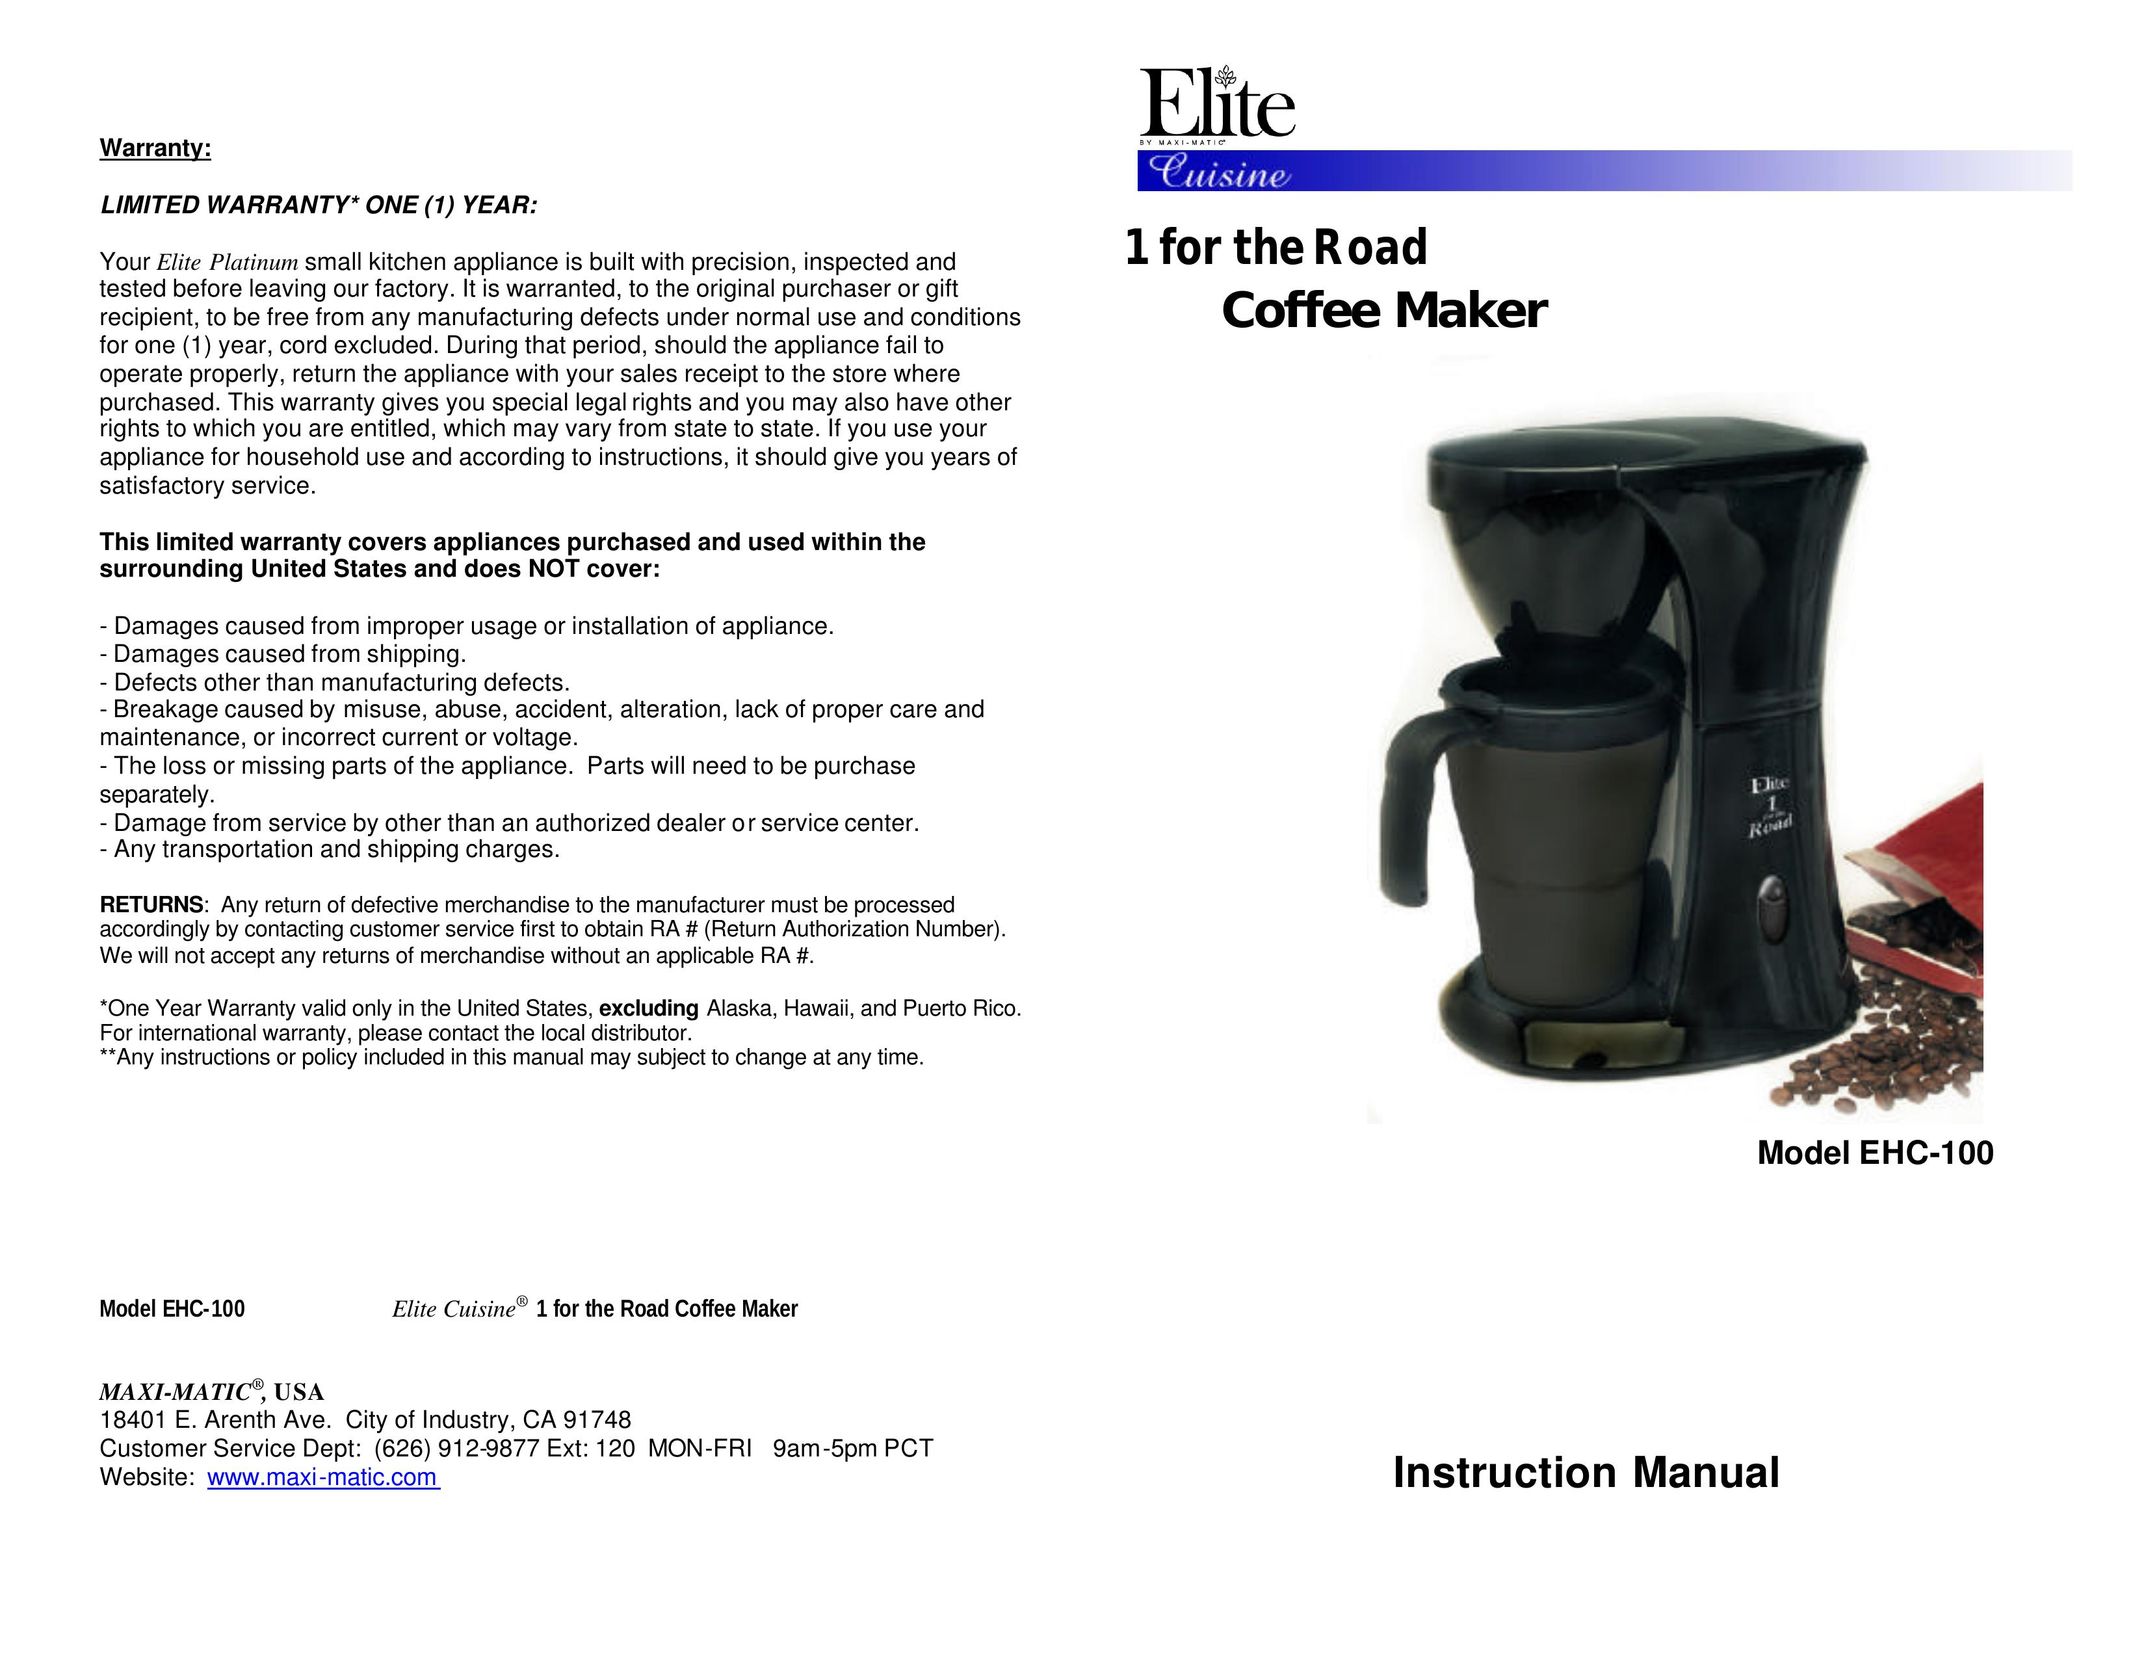 Maximatic EHC-100 Coffeemaker User Manual